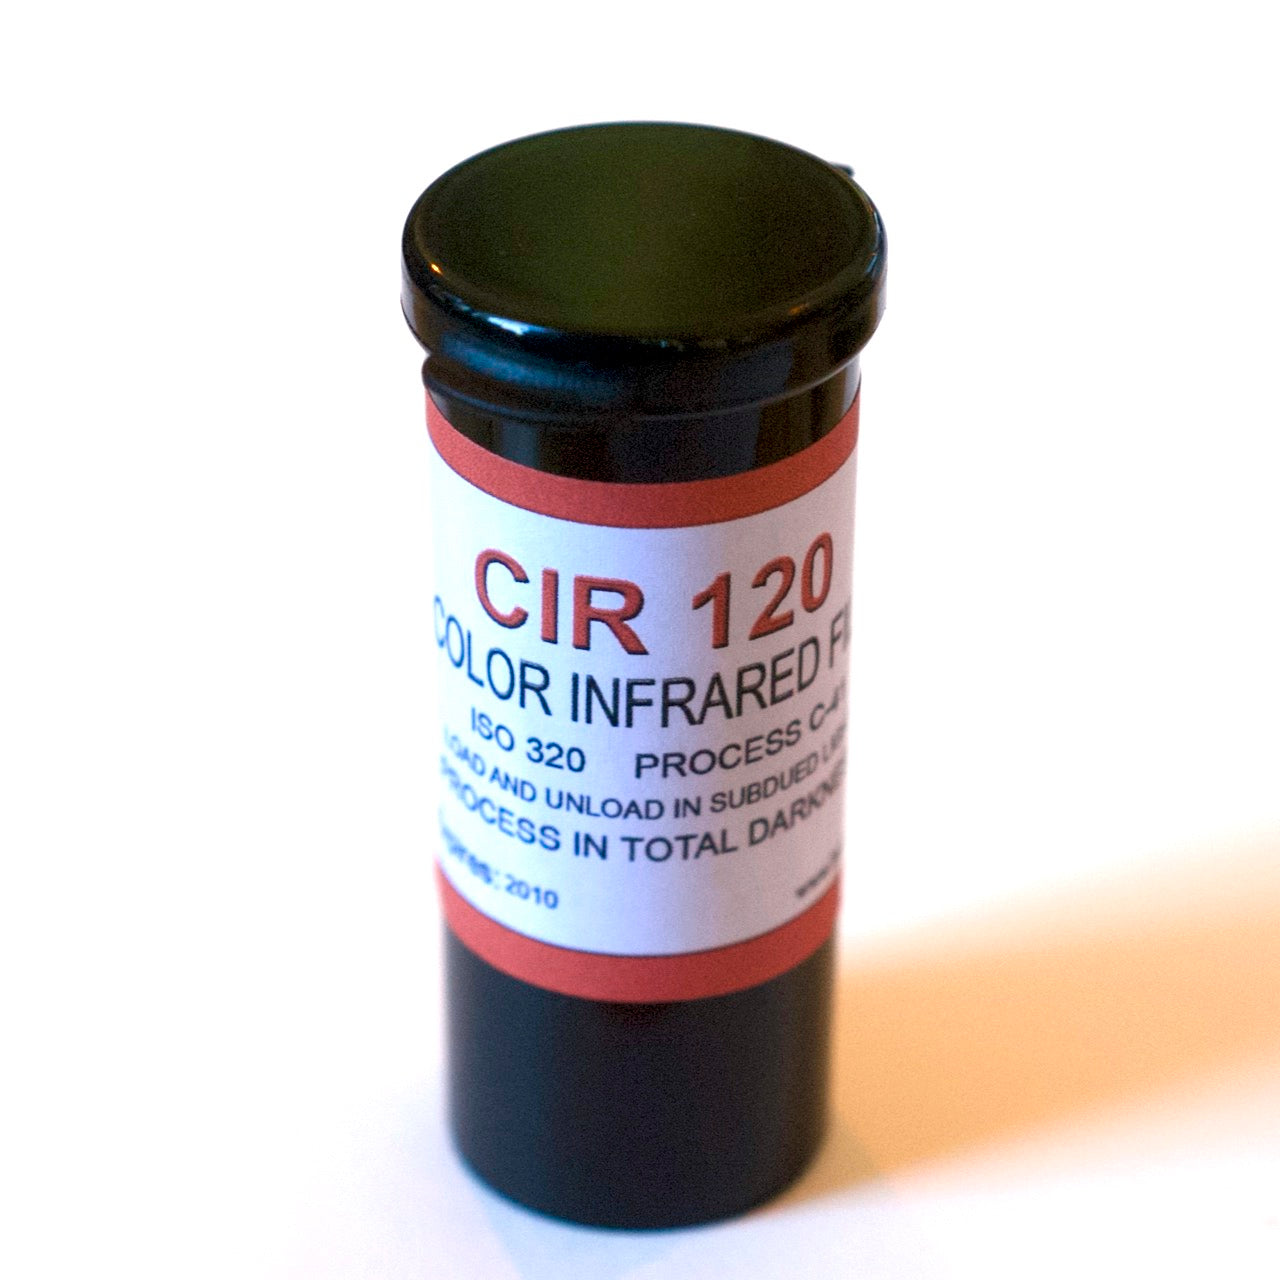 CIR Colour Infrared Film (expired 2010)